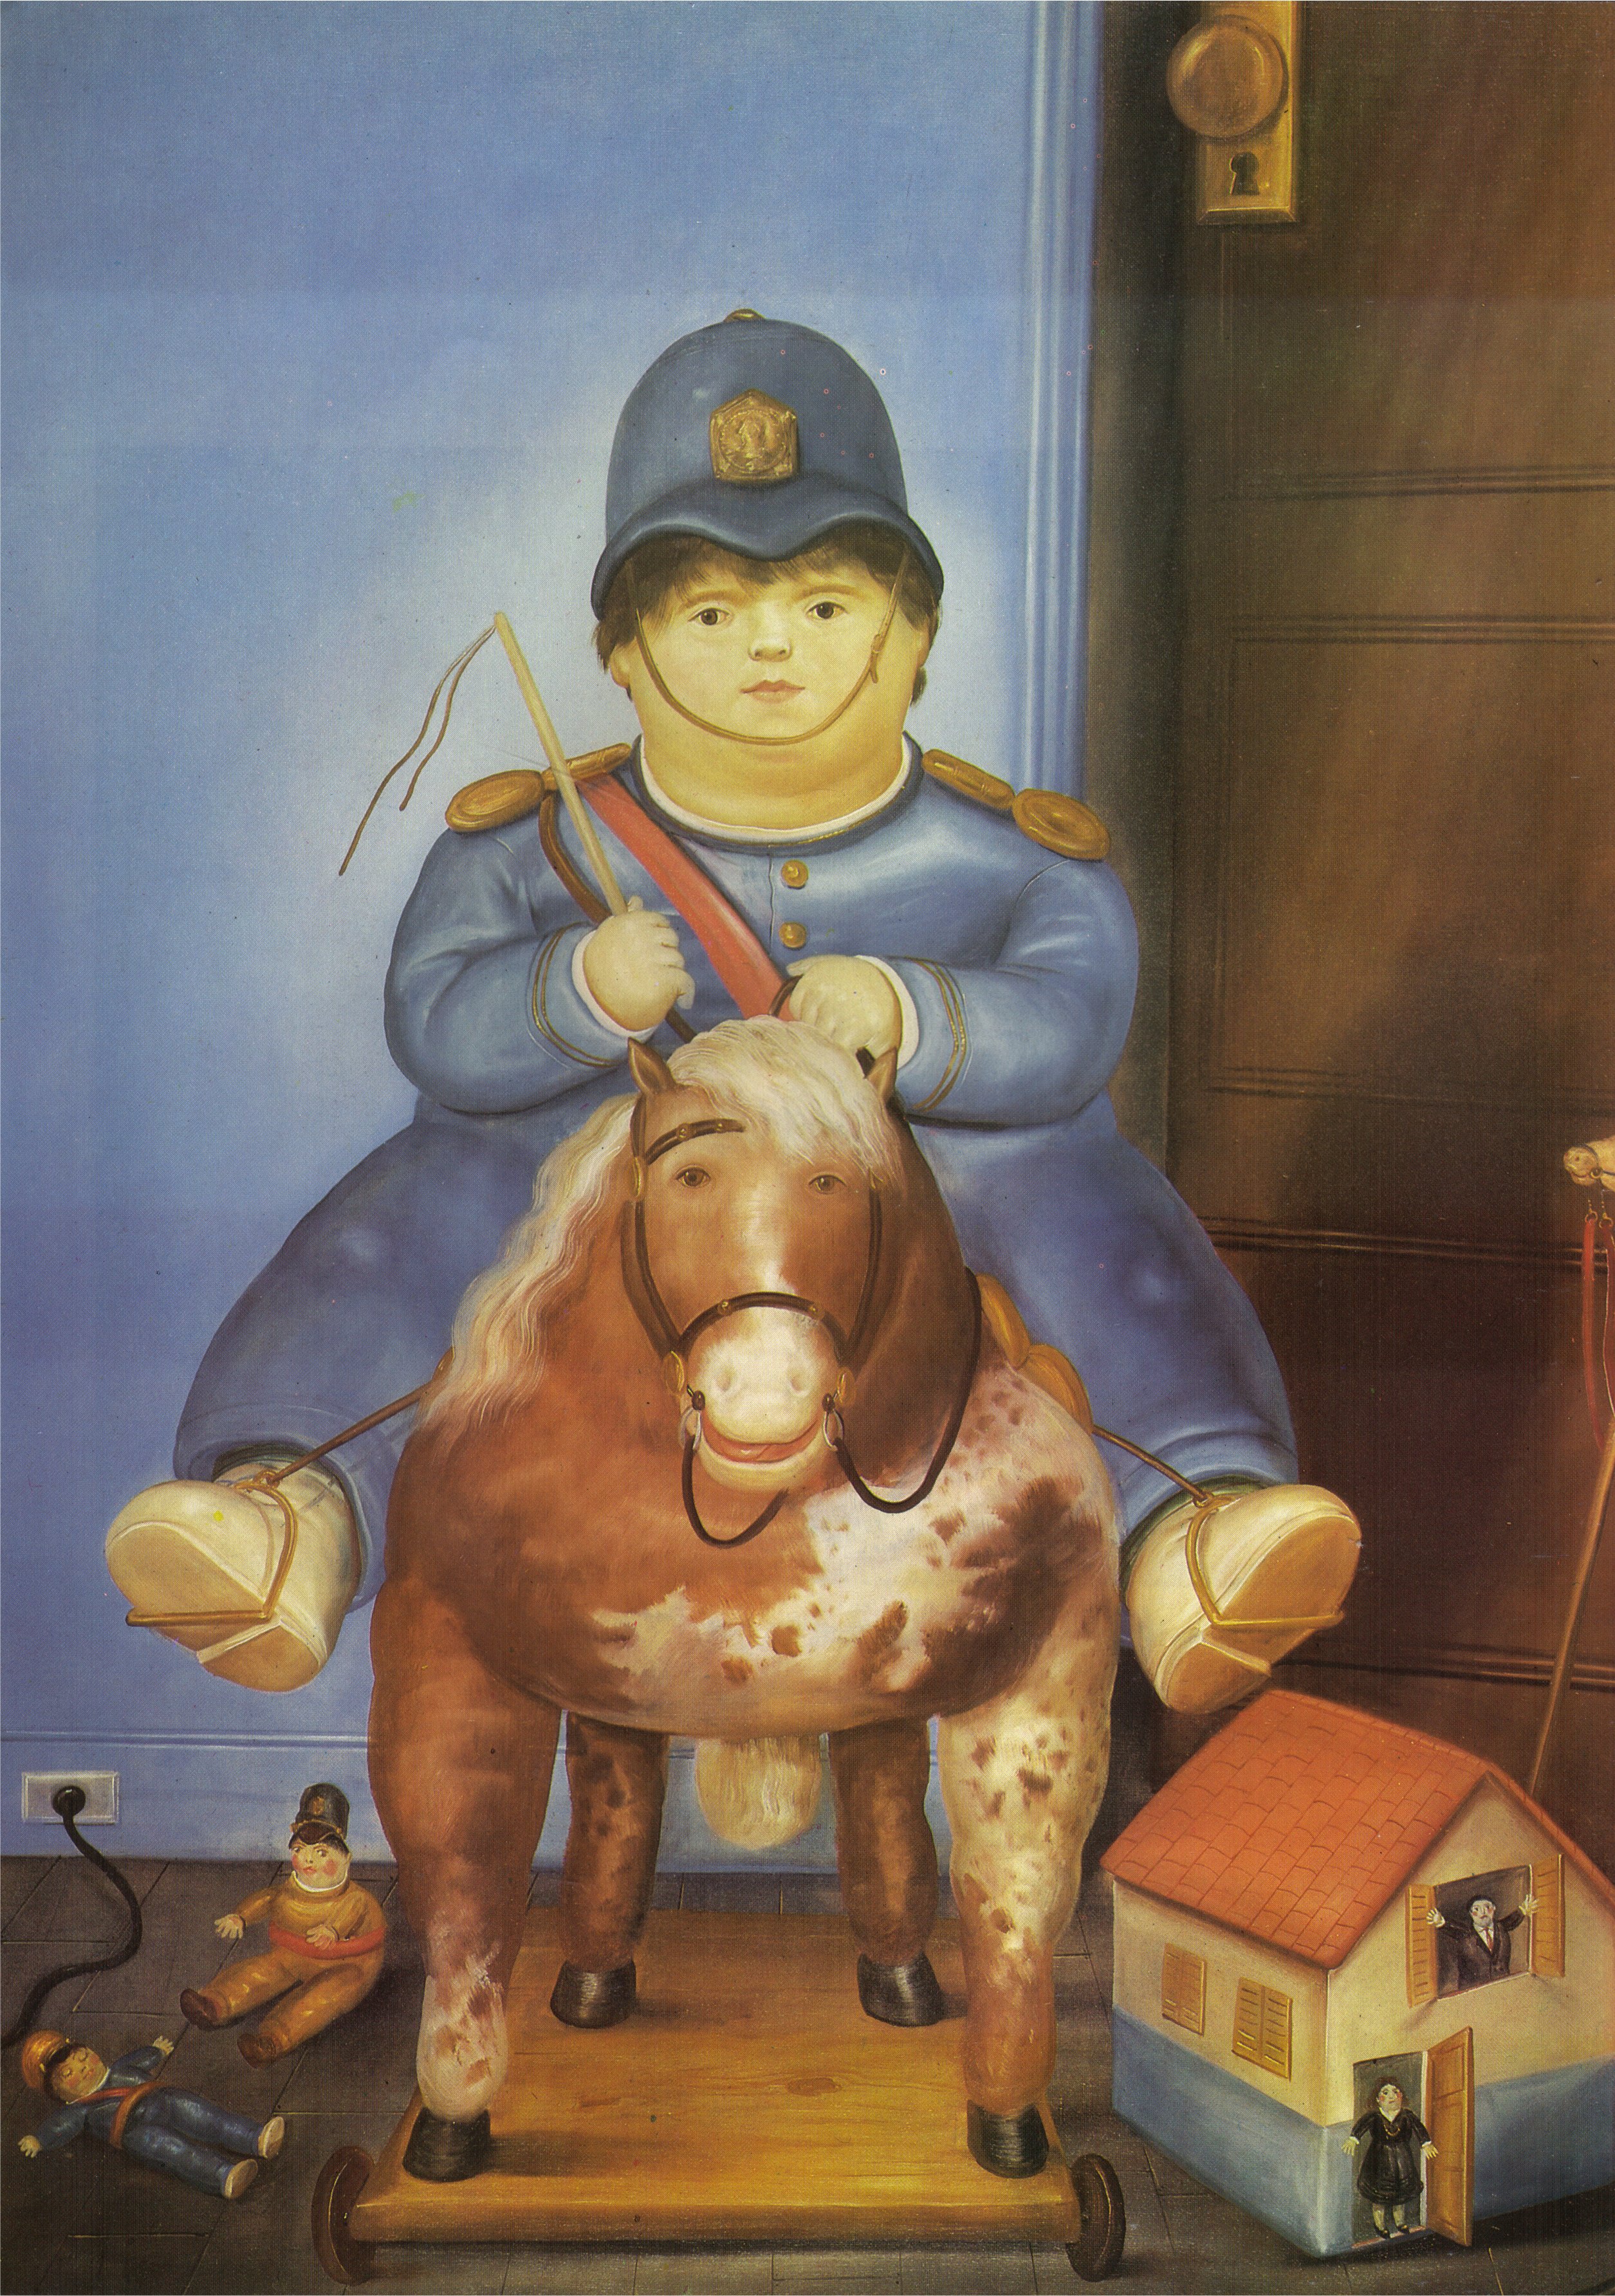 Pedro on Horseback (1974).